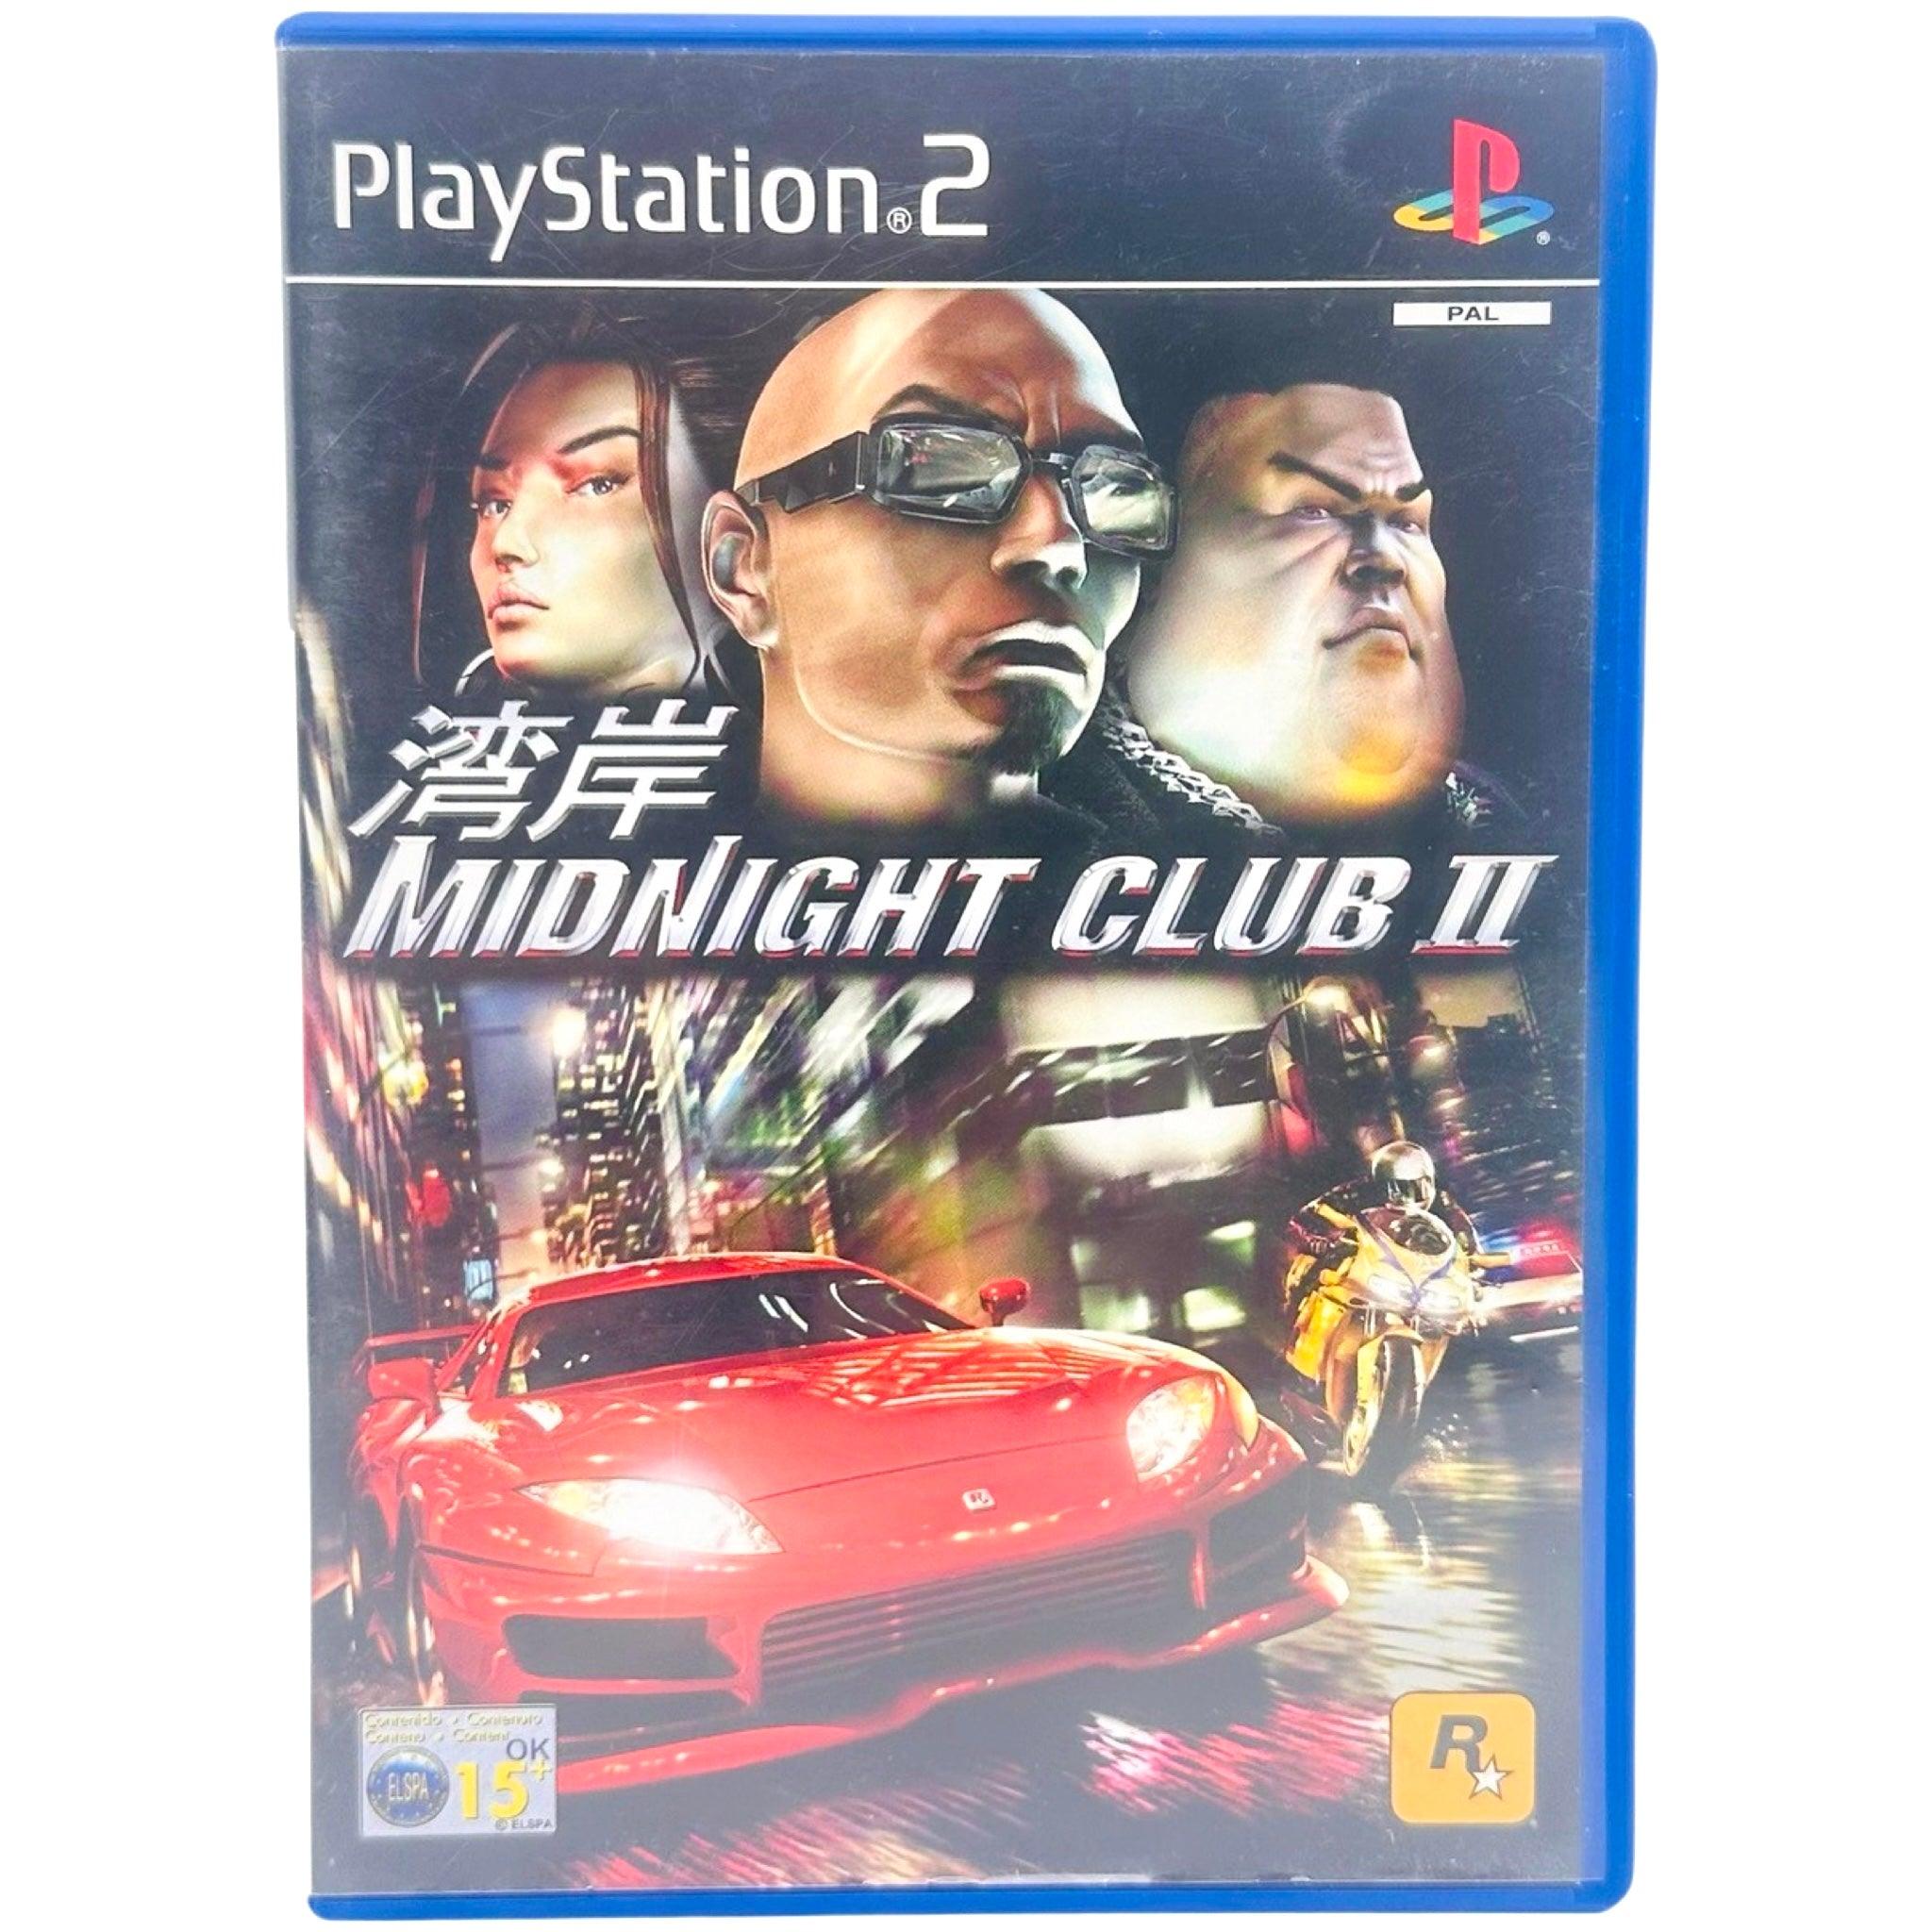 PS2: Midnight Club 2 - RetroGaming.No